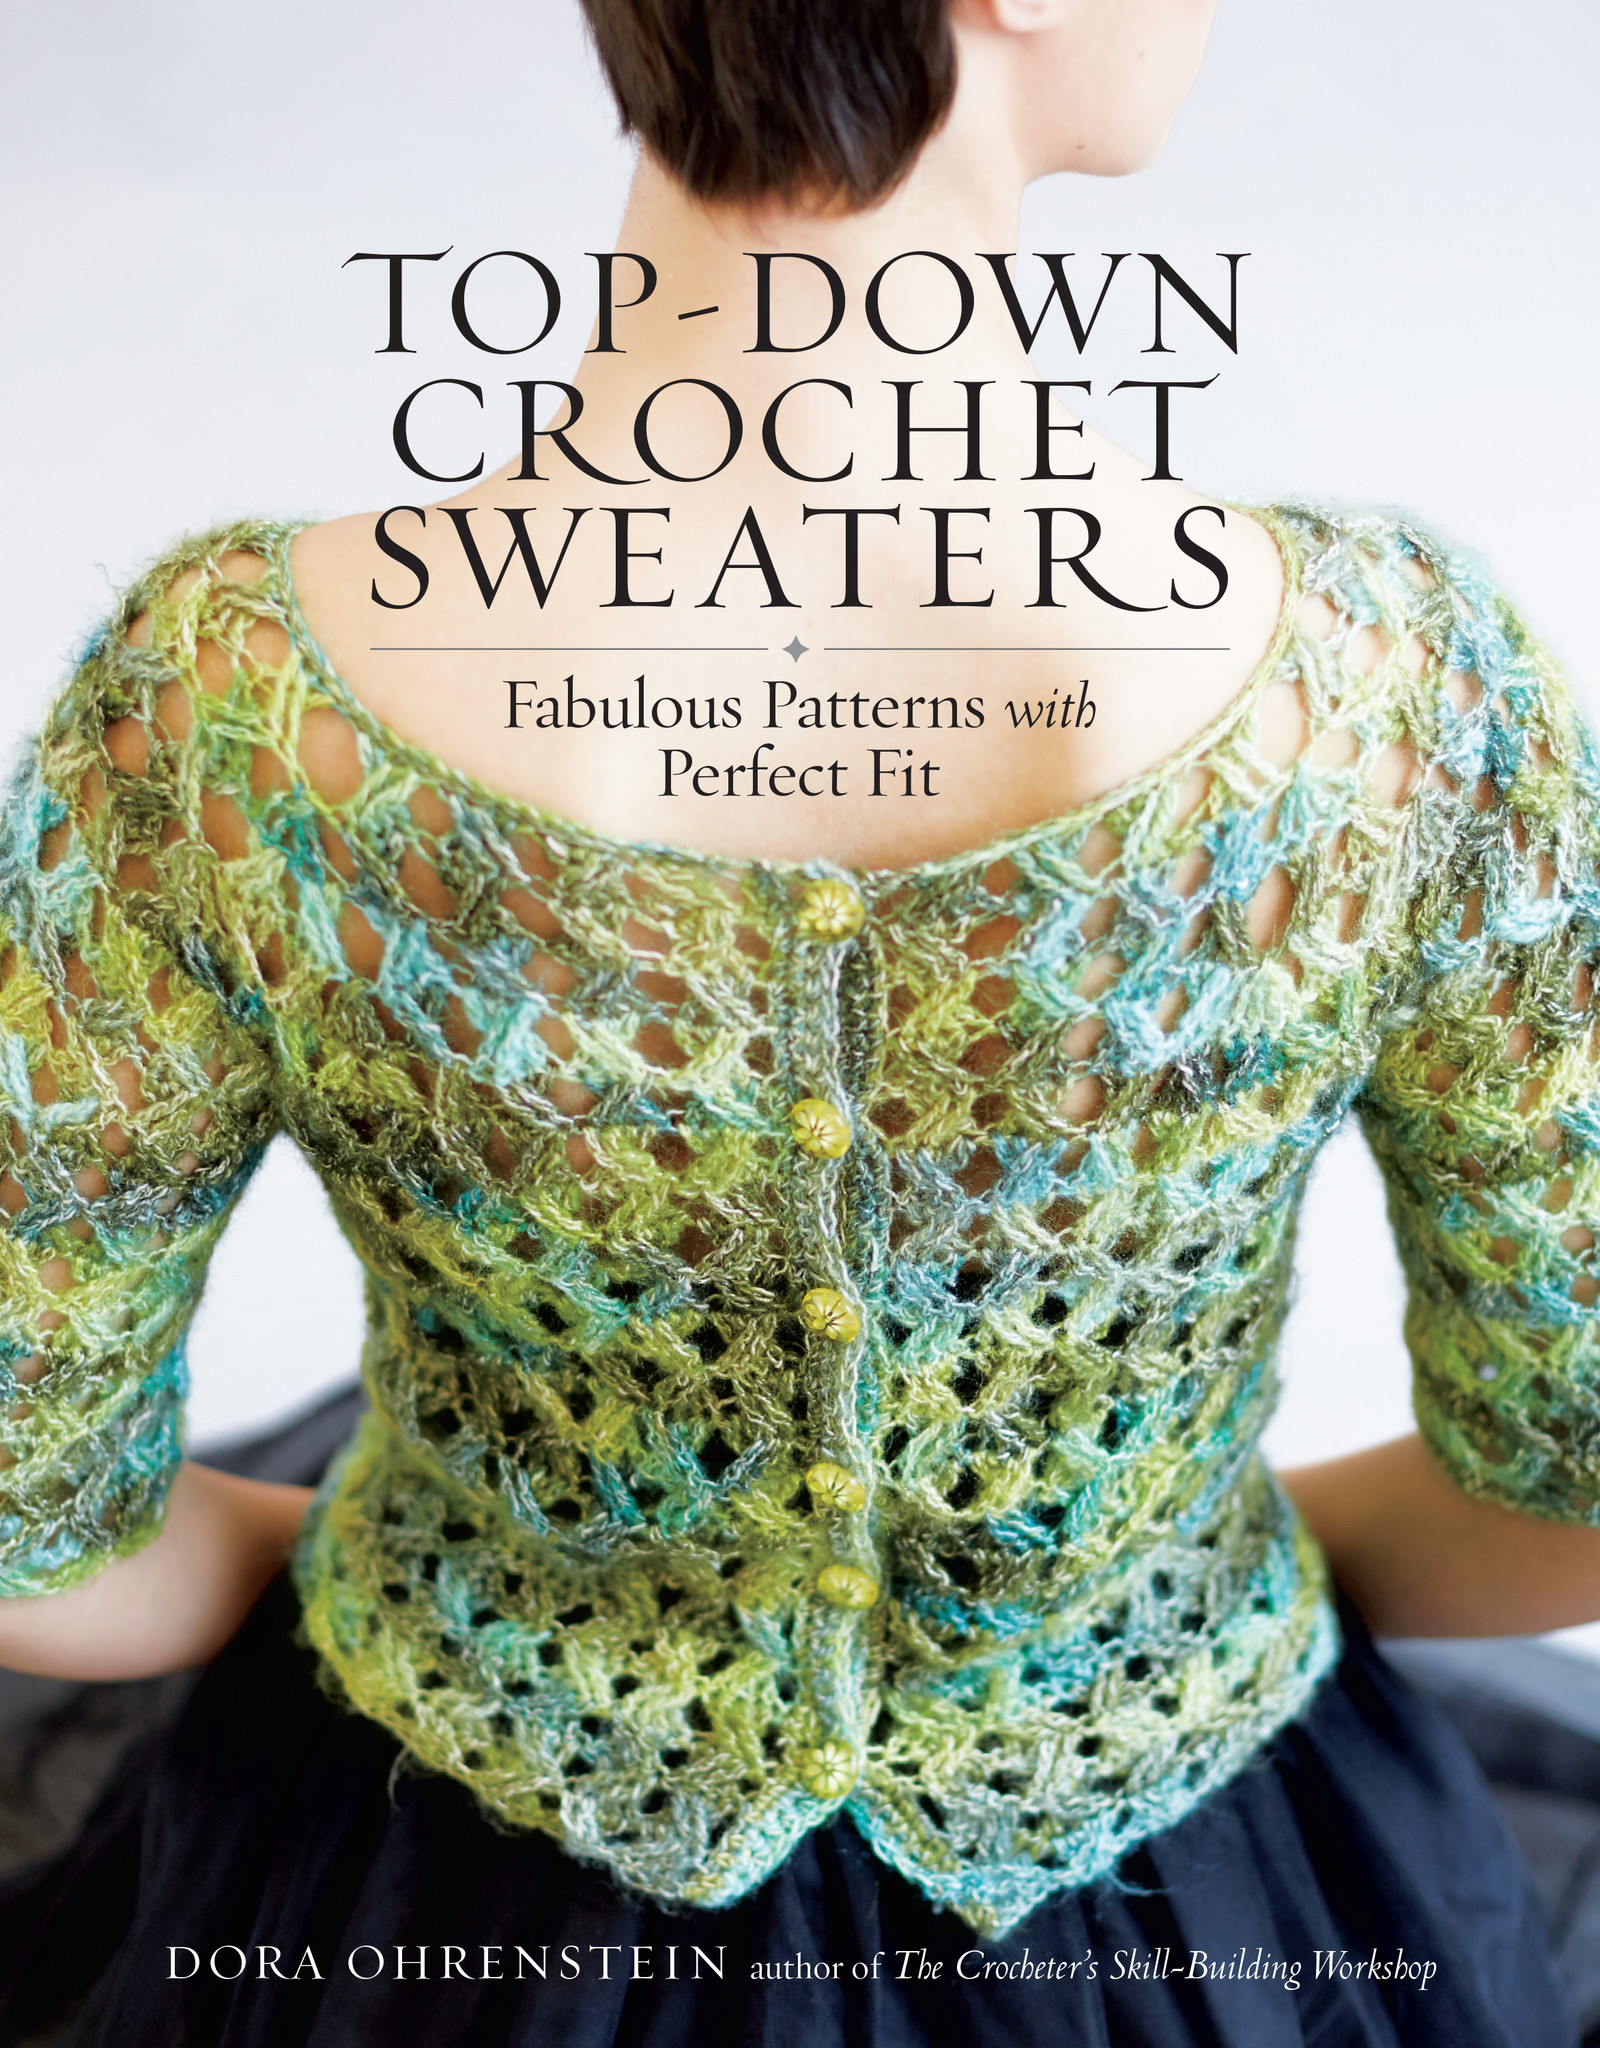 Top-Down Crochet Sweaters